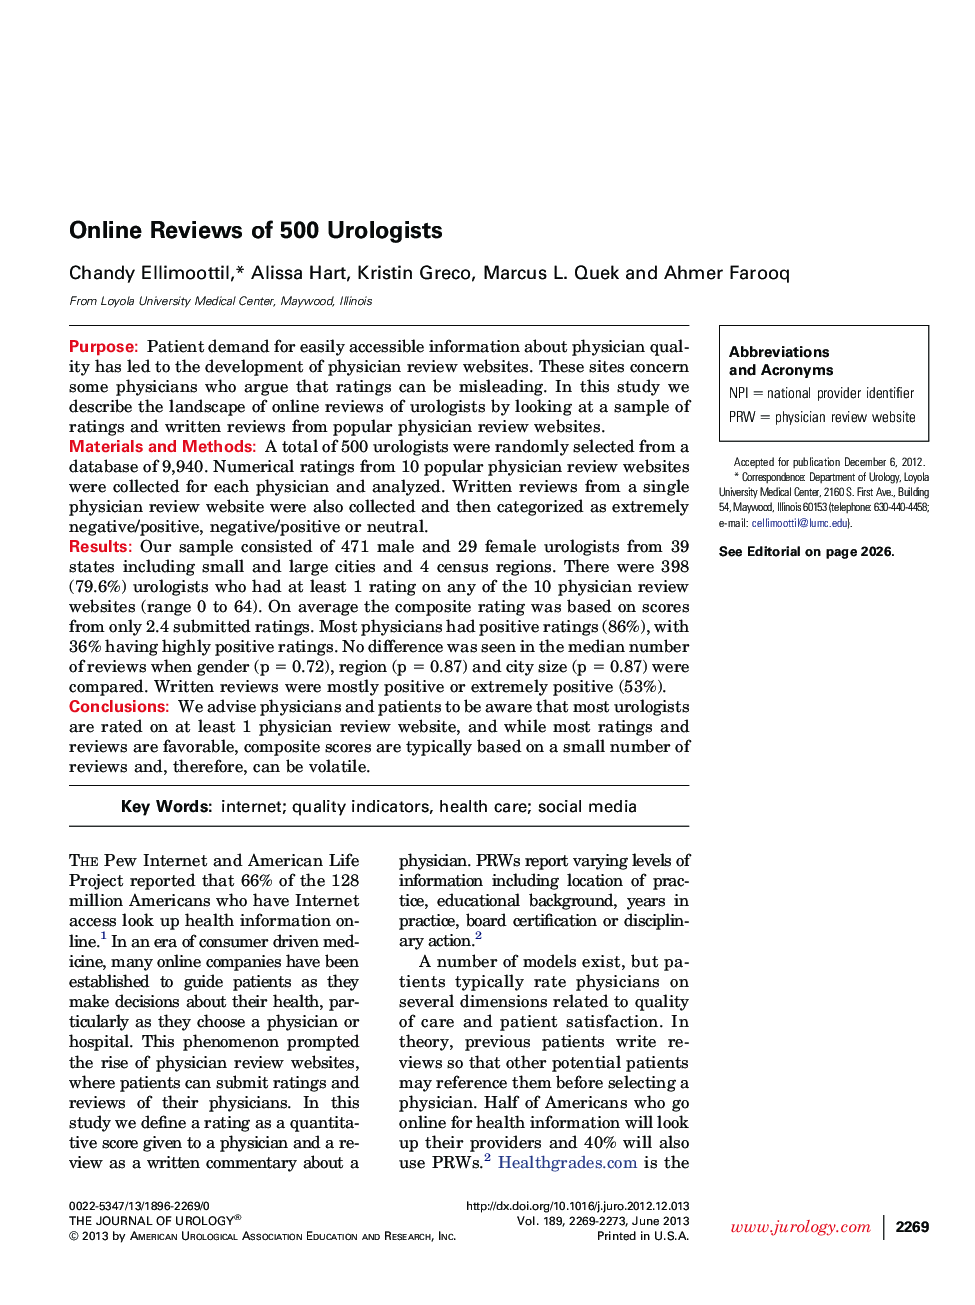 Online Reviews of 500 Urologists 